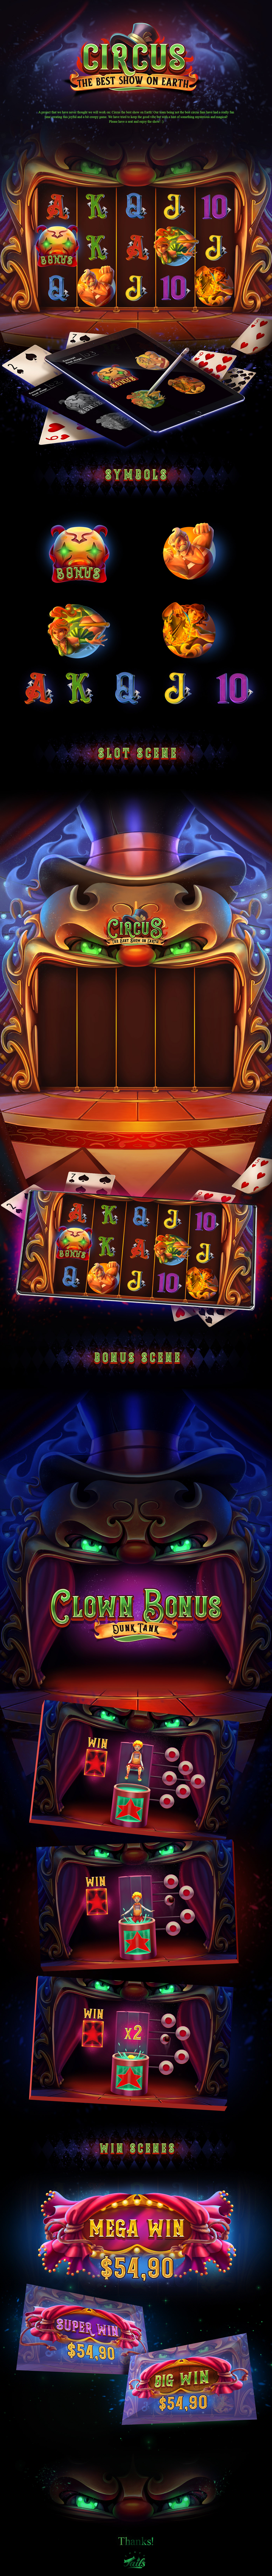 game slot slotgame Slots art casino Casino games design DIGITALDRAWING slotgames